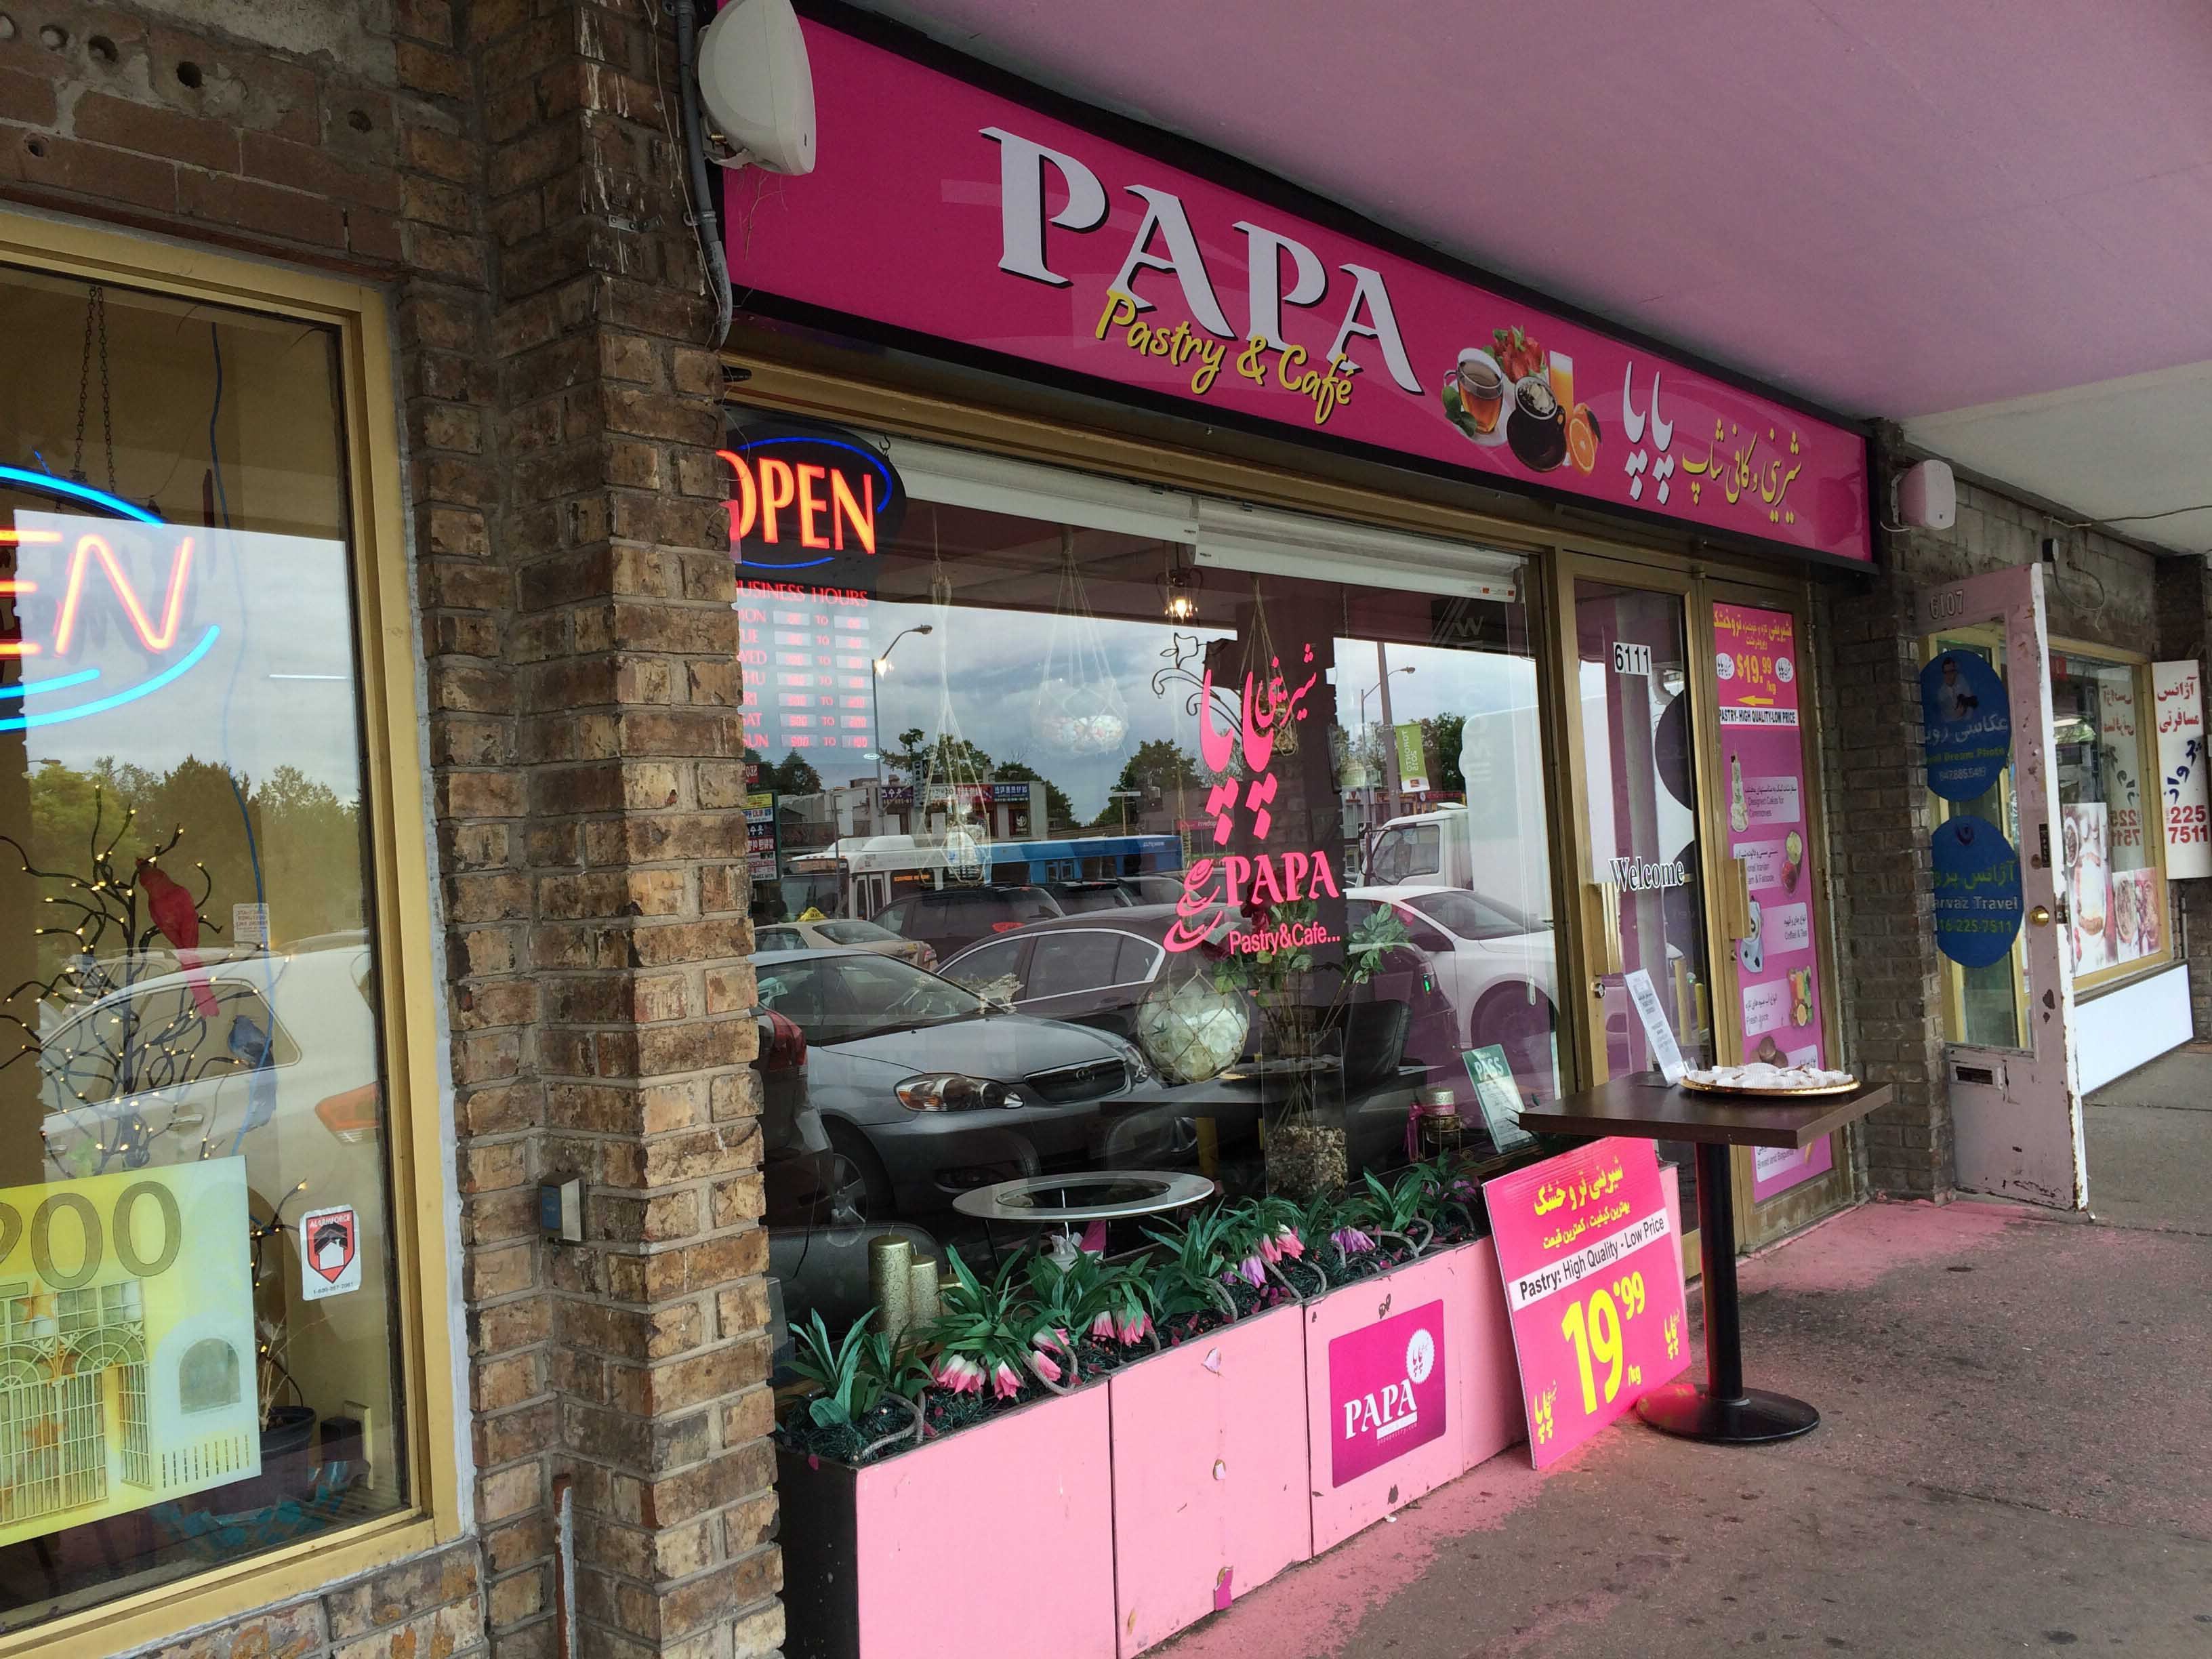 Papa Pastry & Café